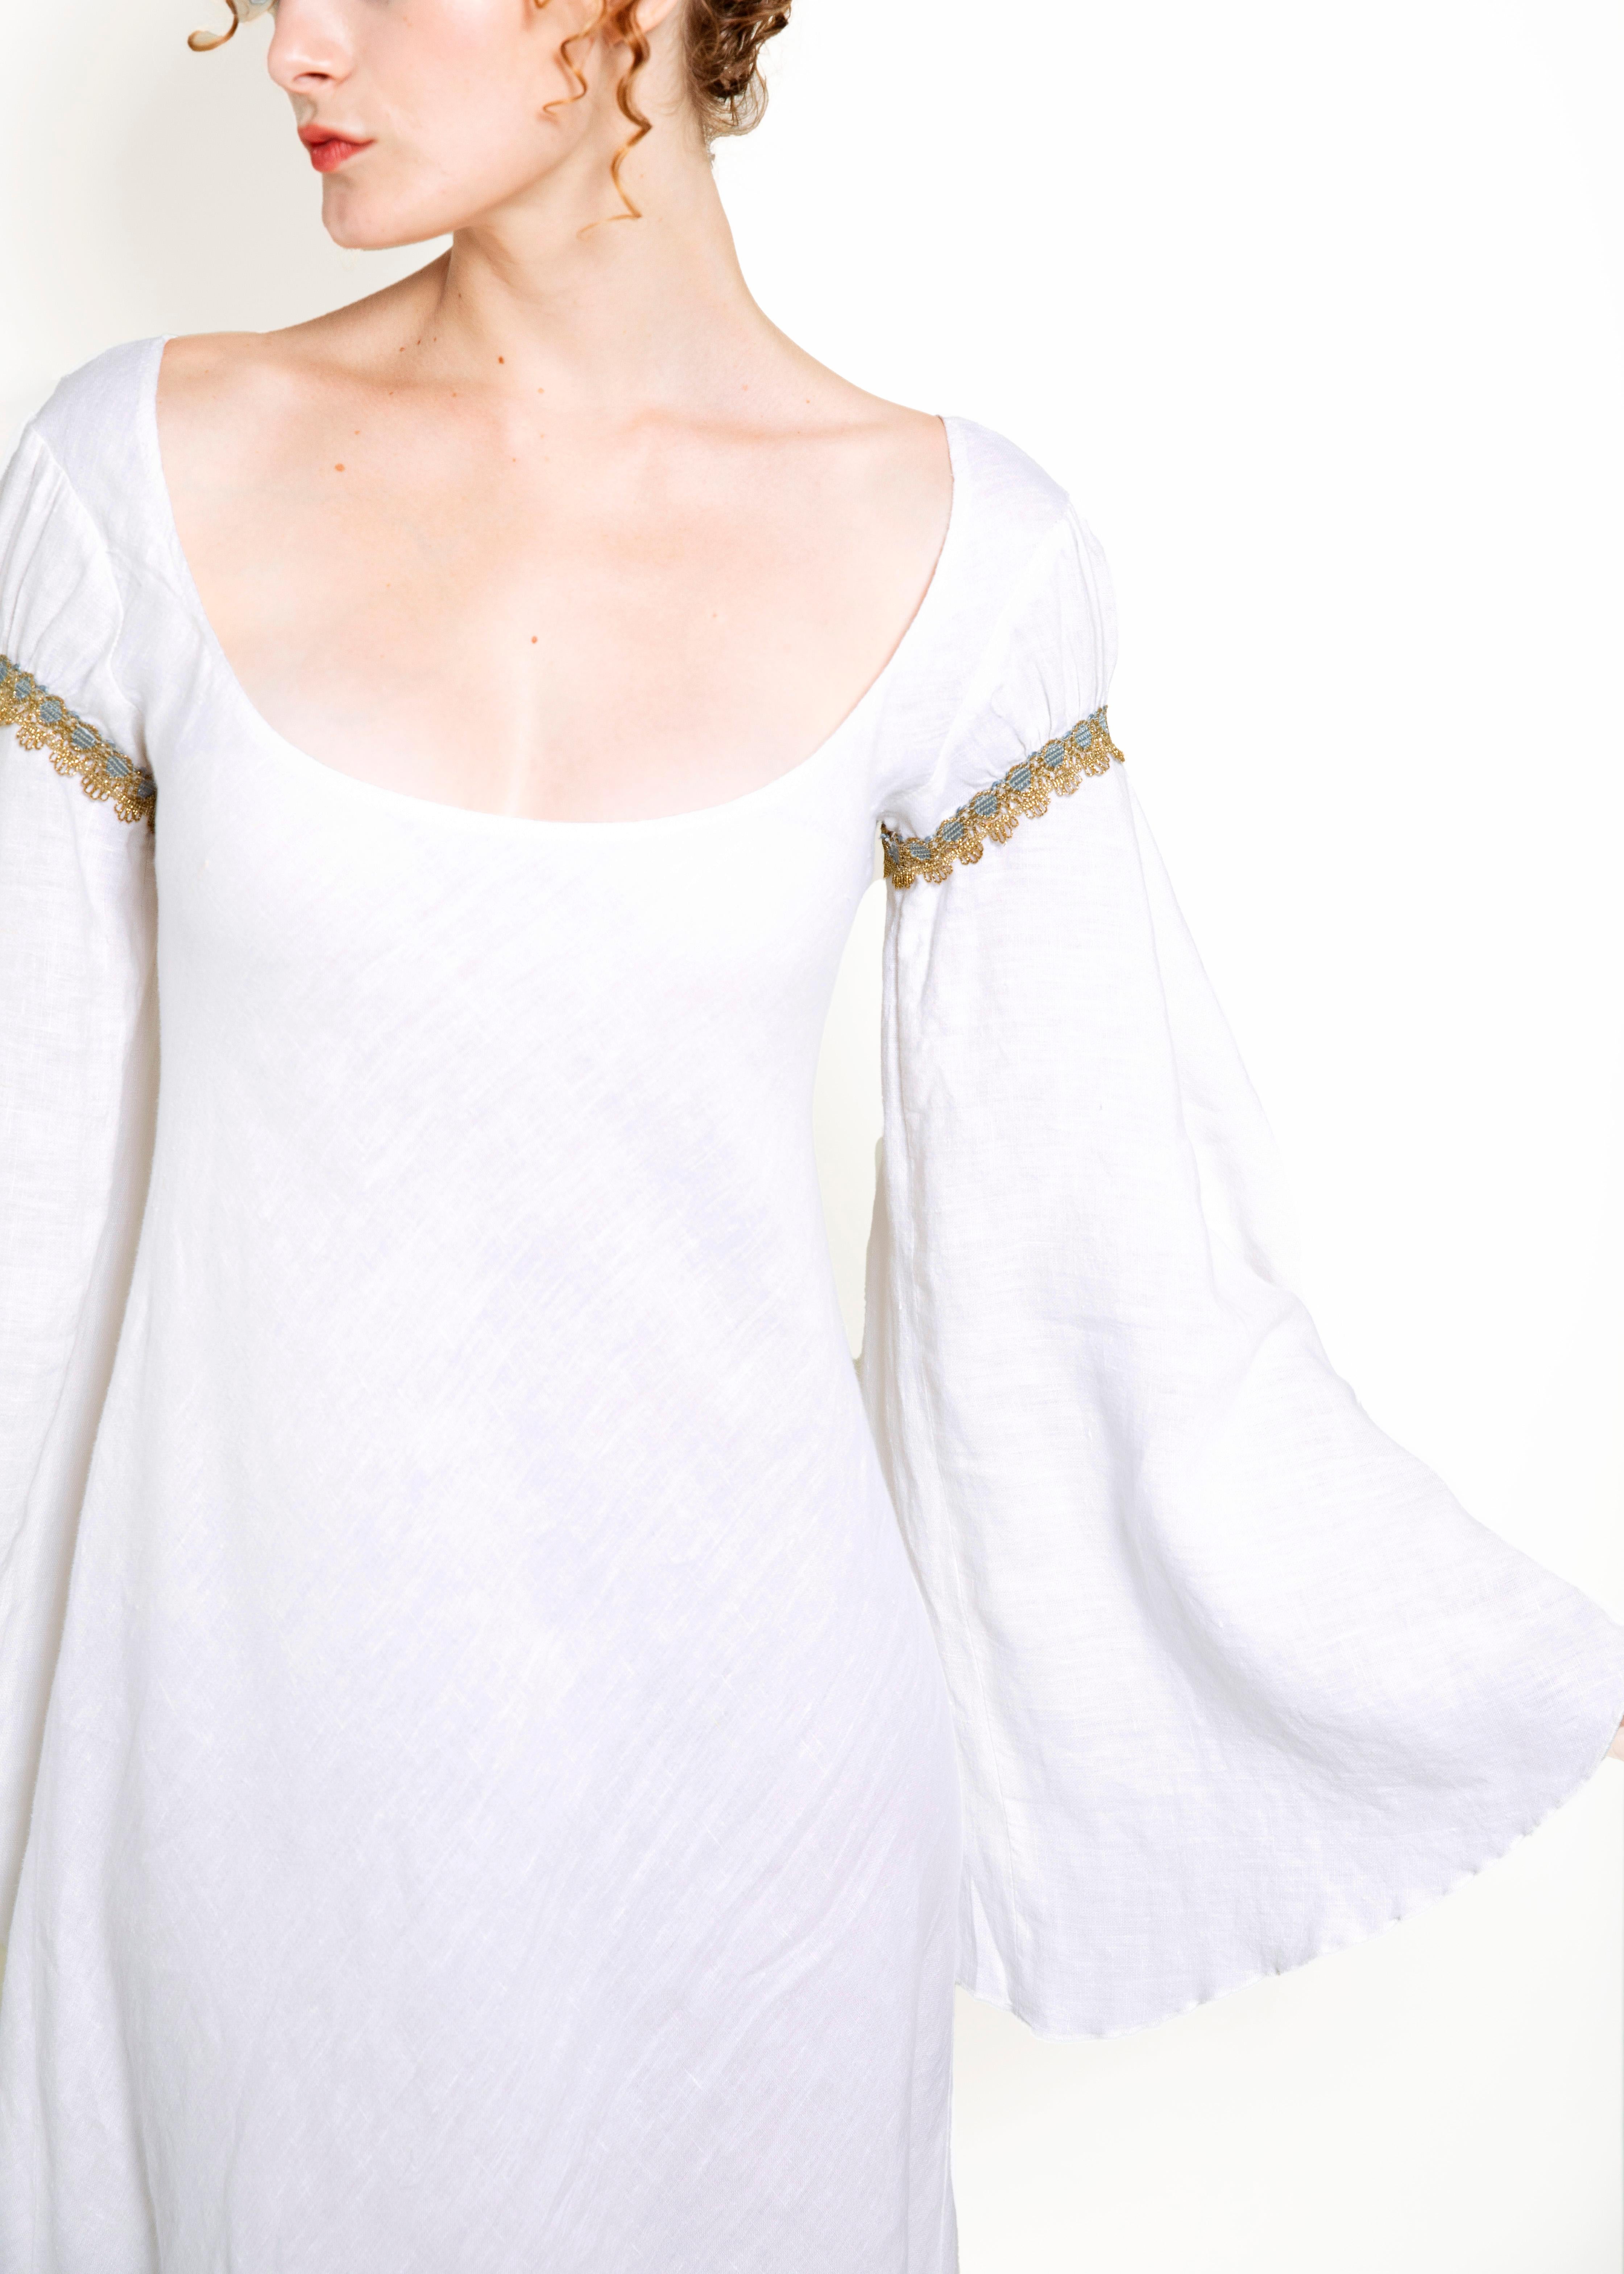 Jane Booke Linen Camelot Dress W/ Trim For Sale 1